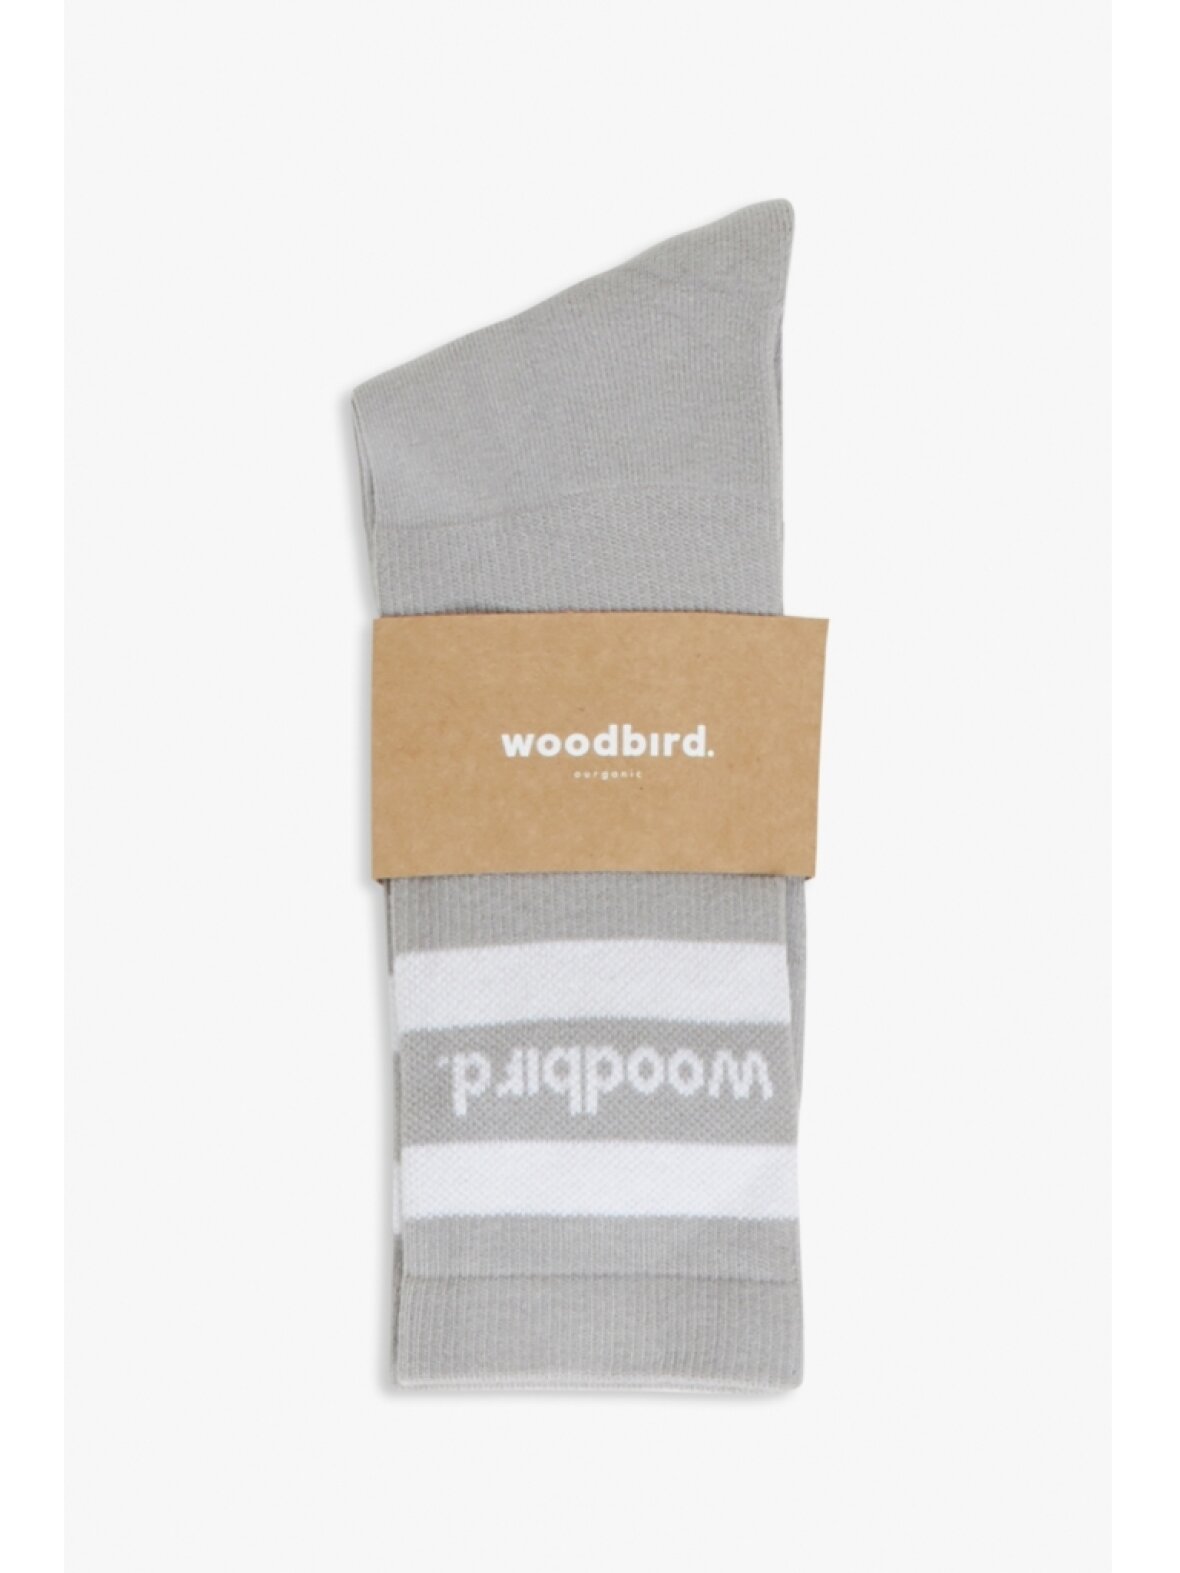 Nønne - woodbird - woodbird Our socks